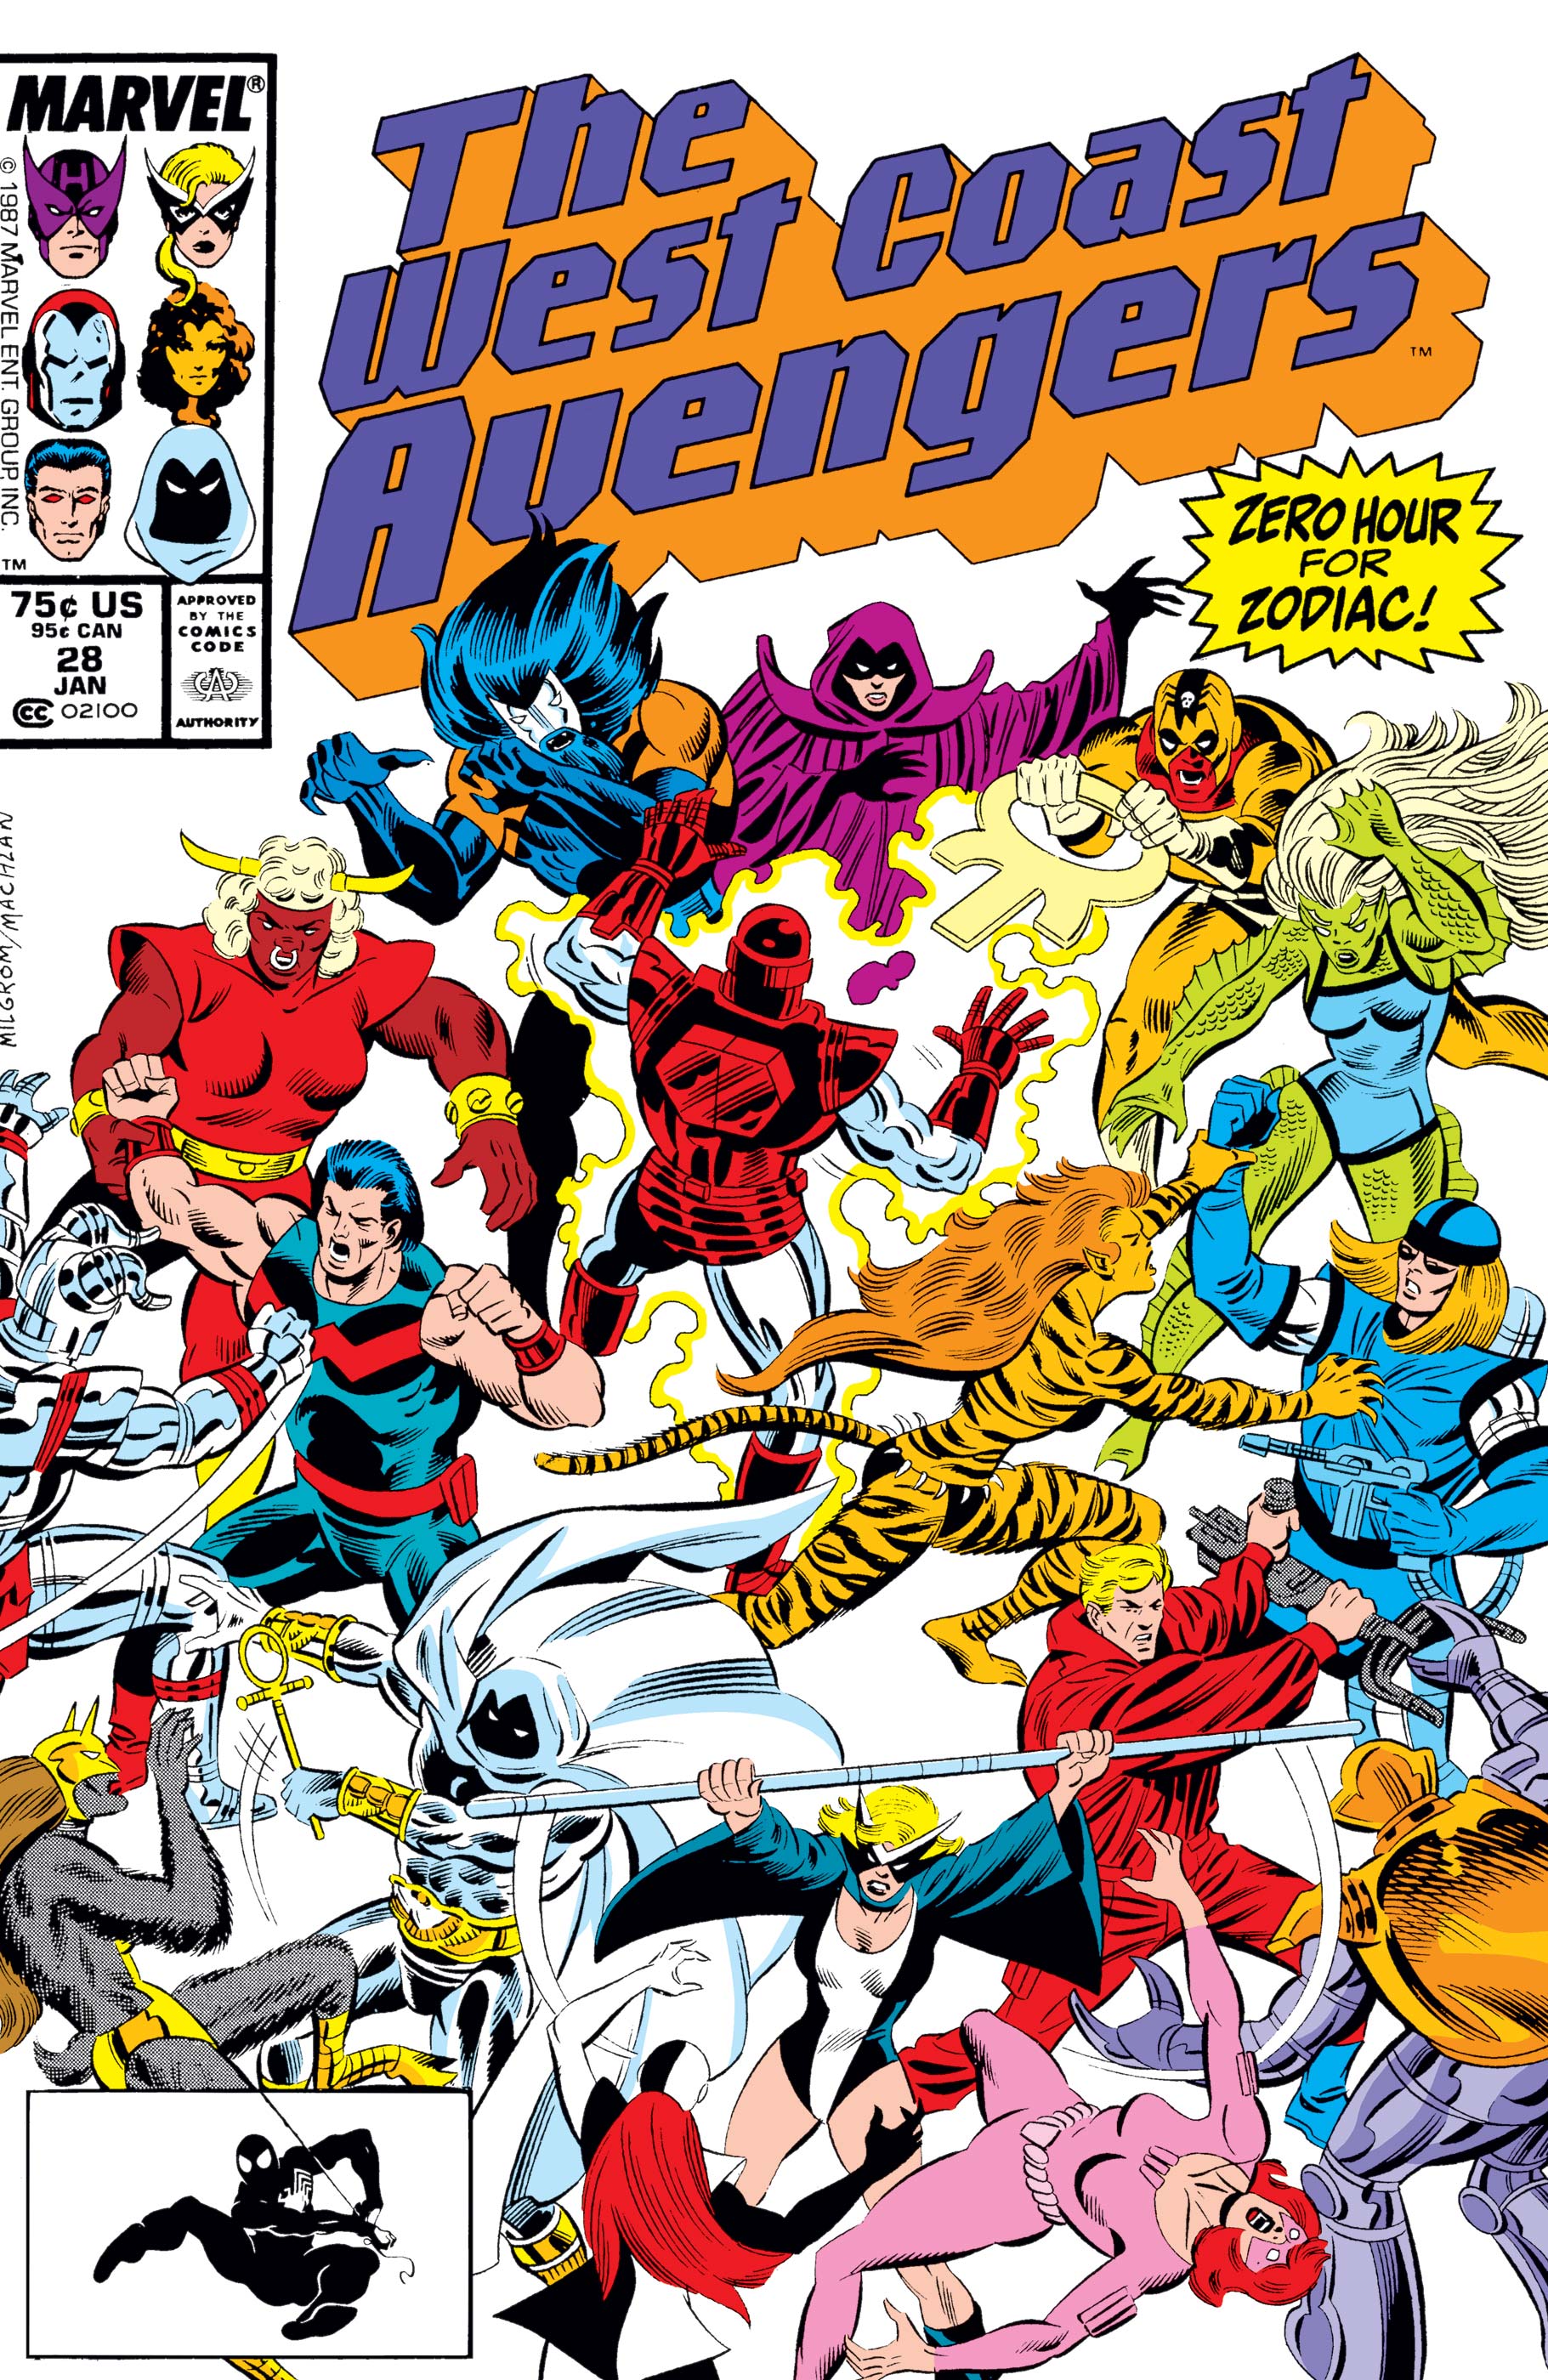 West Coast Avengers (1985) #28 | Comic Issues | Marvel